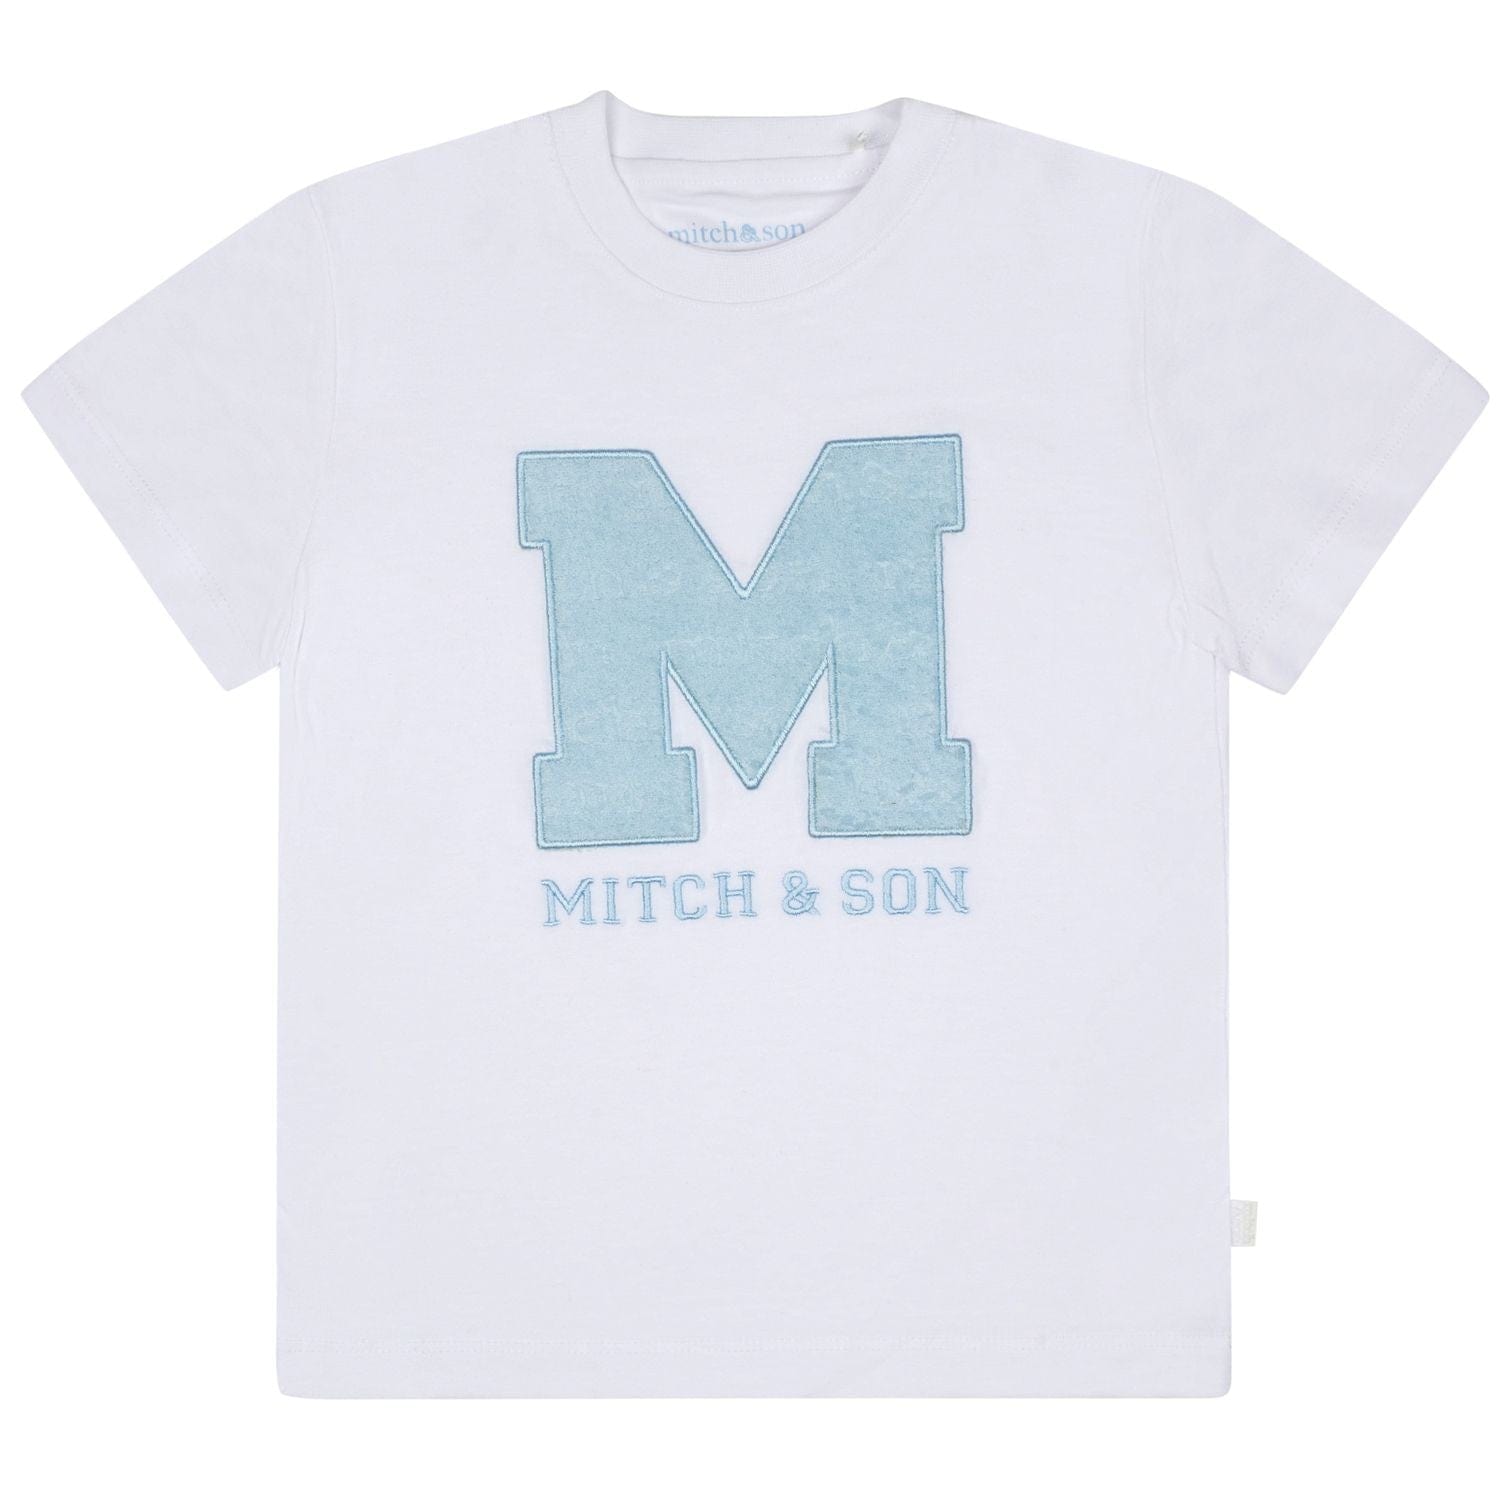 Mitch & Son T-shirt - Thom